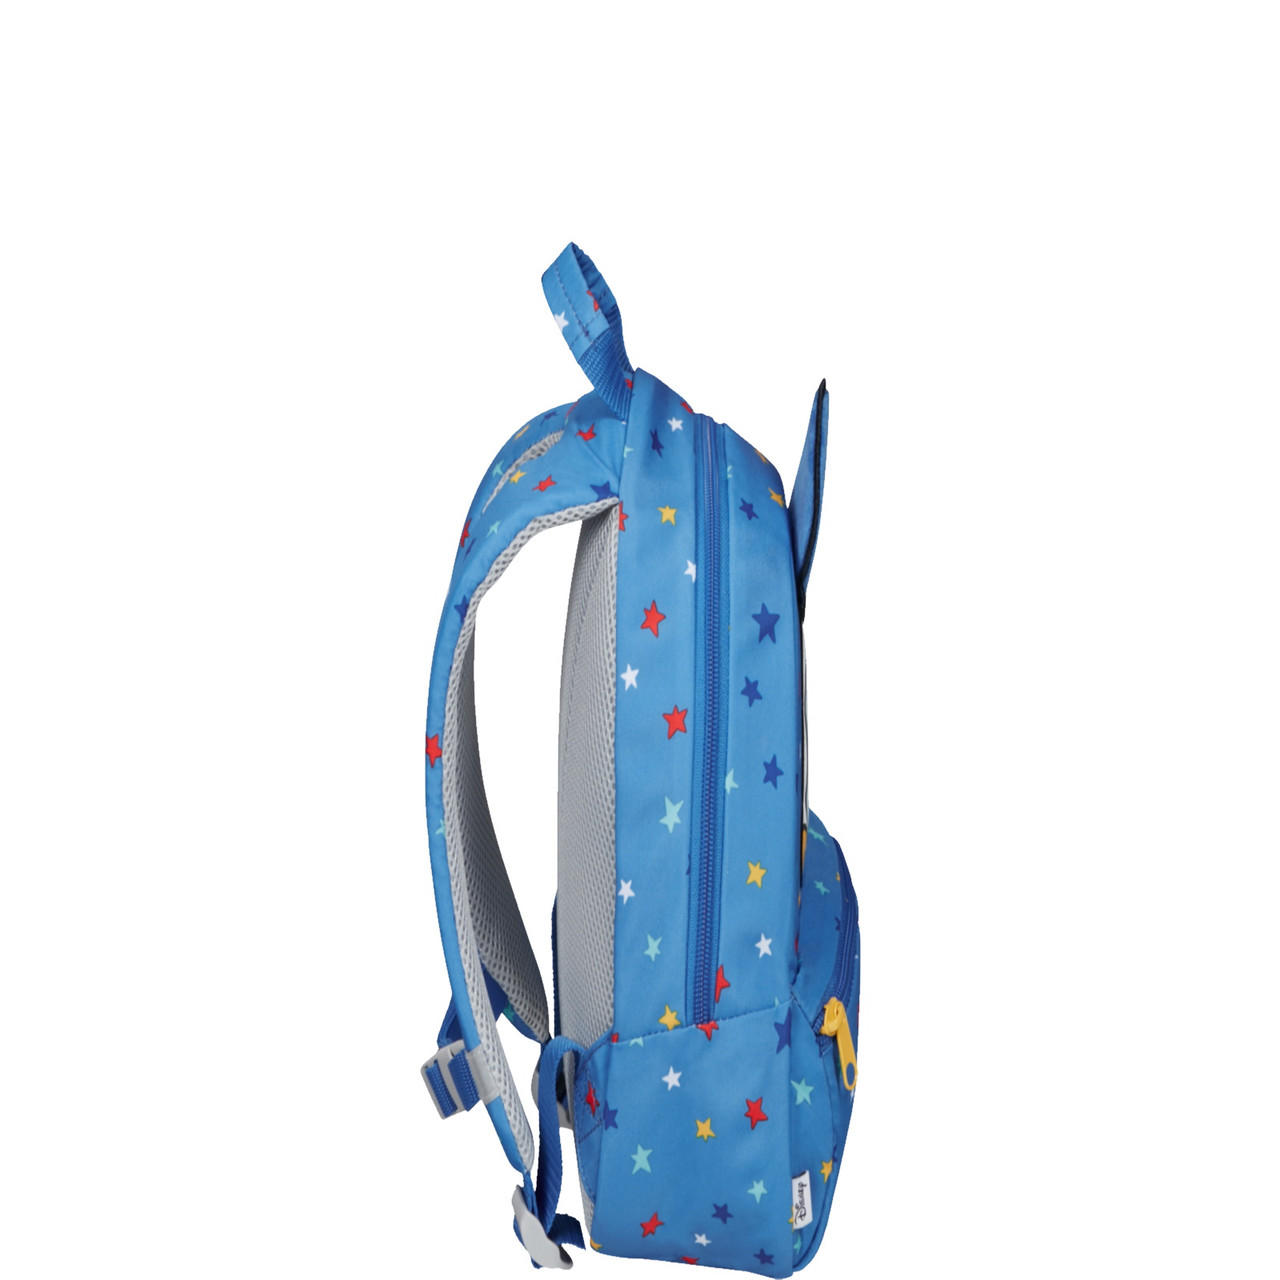 2.0 Backpack Ultimate Samsonite at Disney Luggage Donald Stars Superstore S